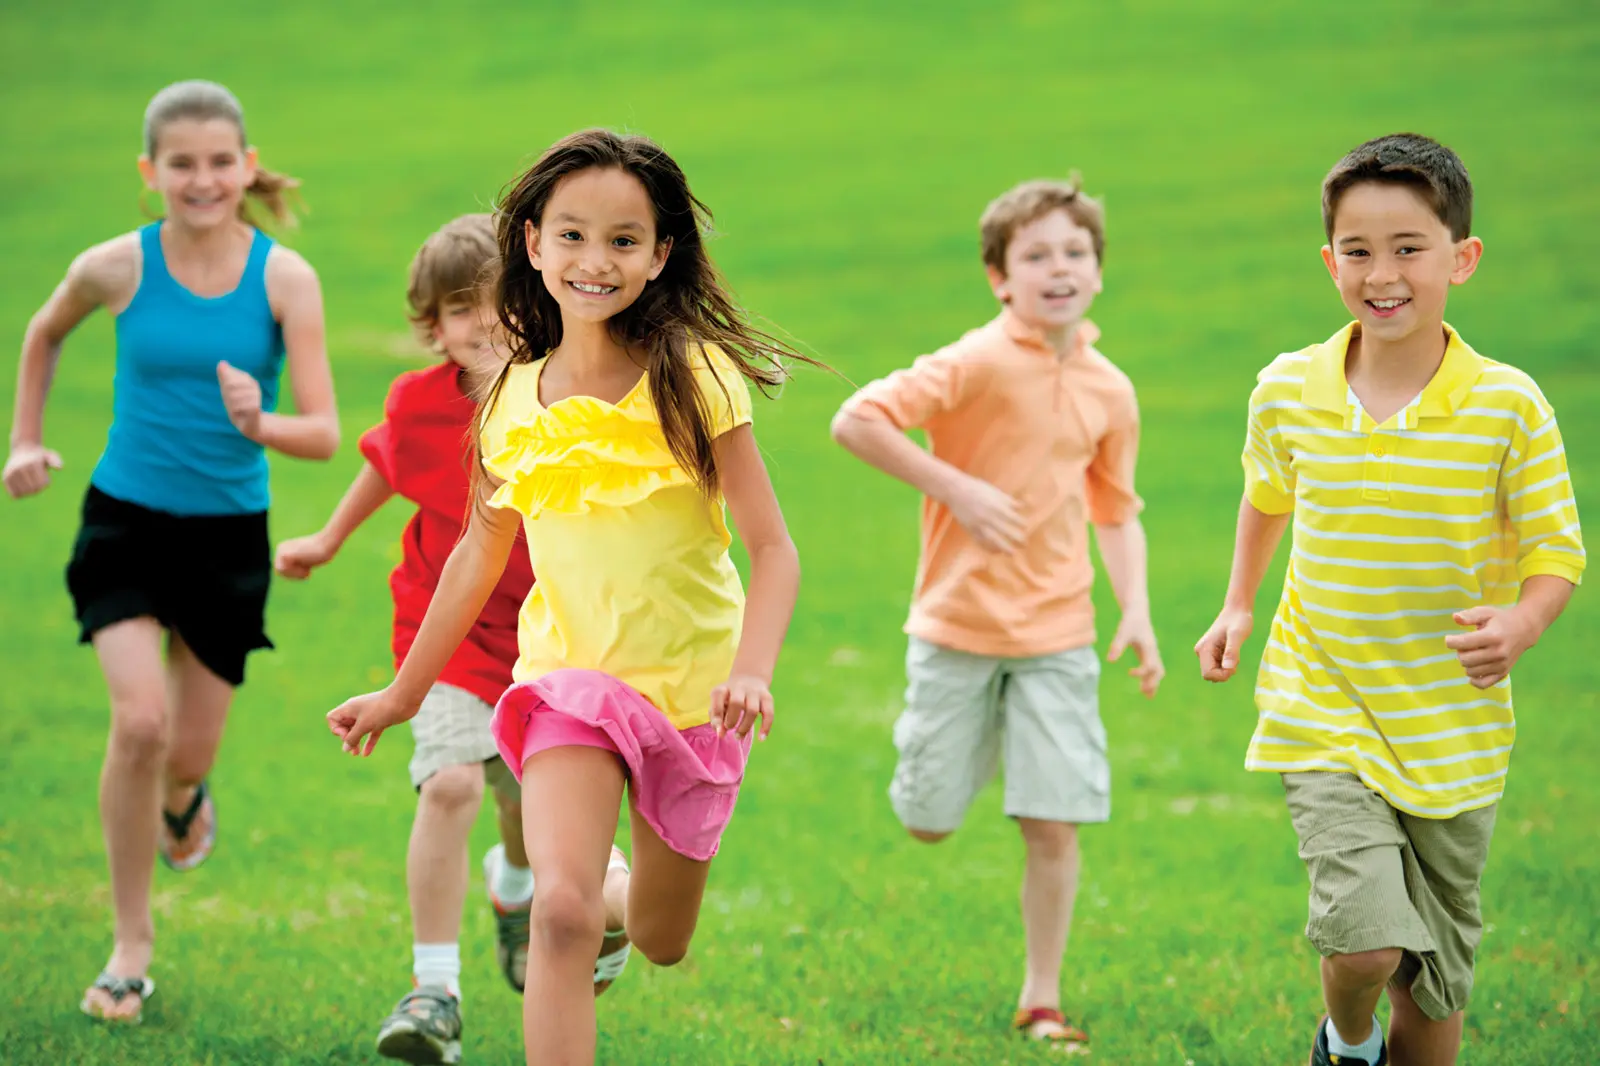 Children in bright clothing running on green grass field